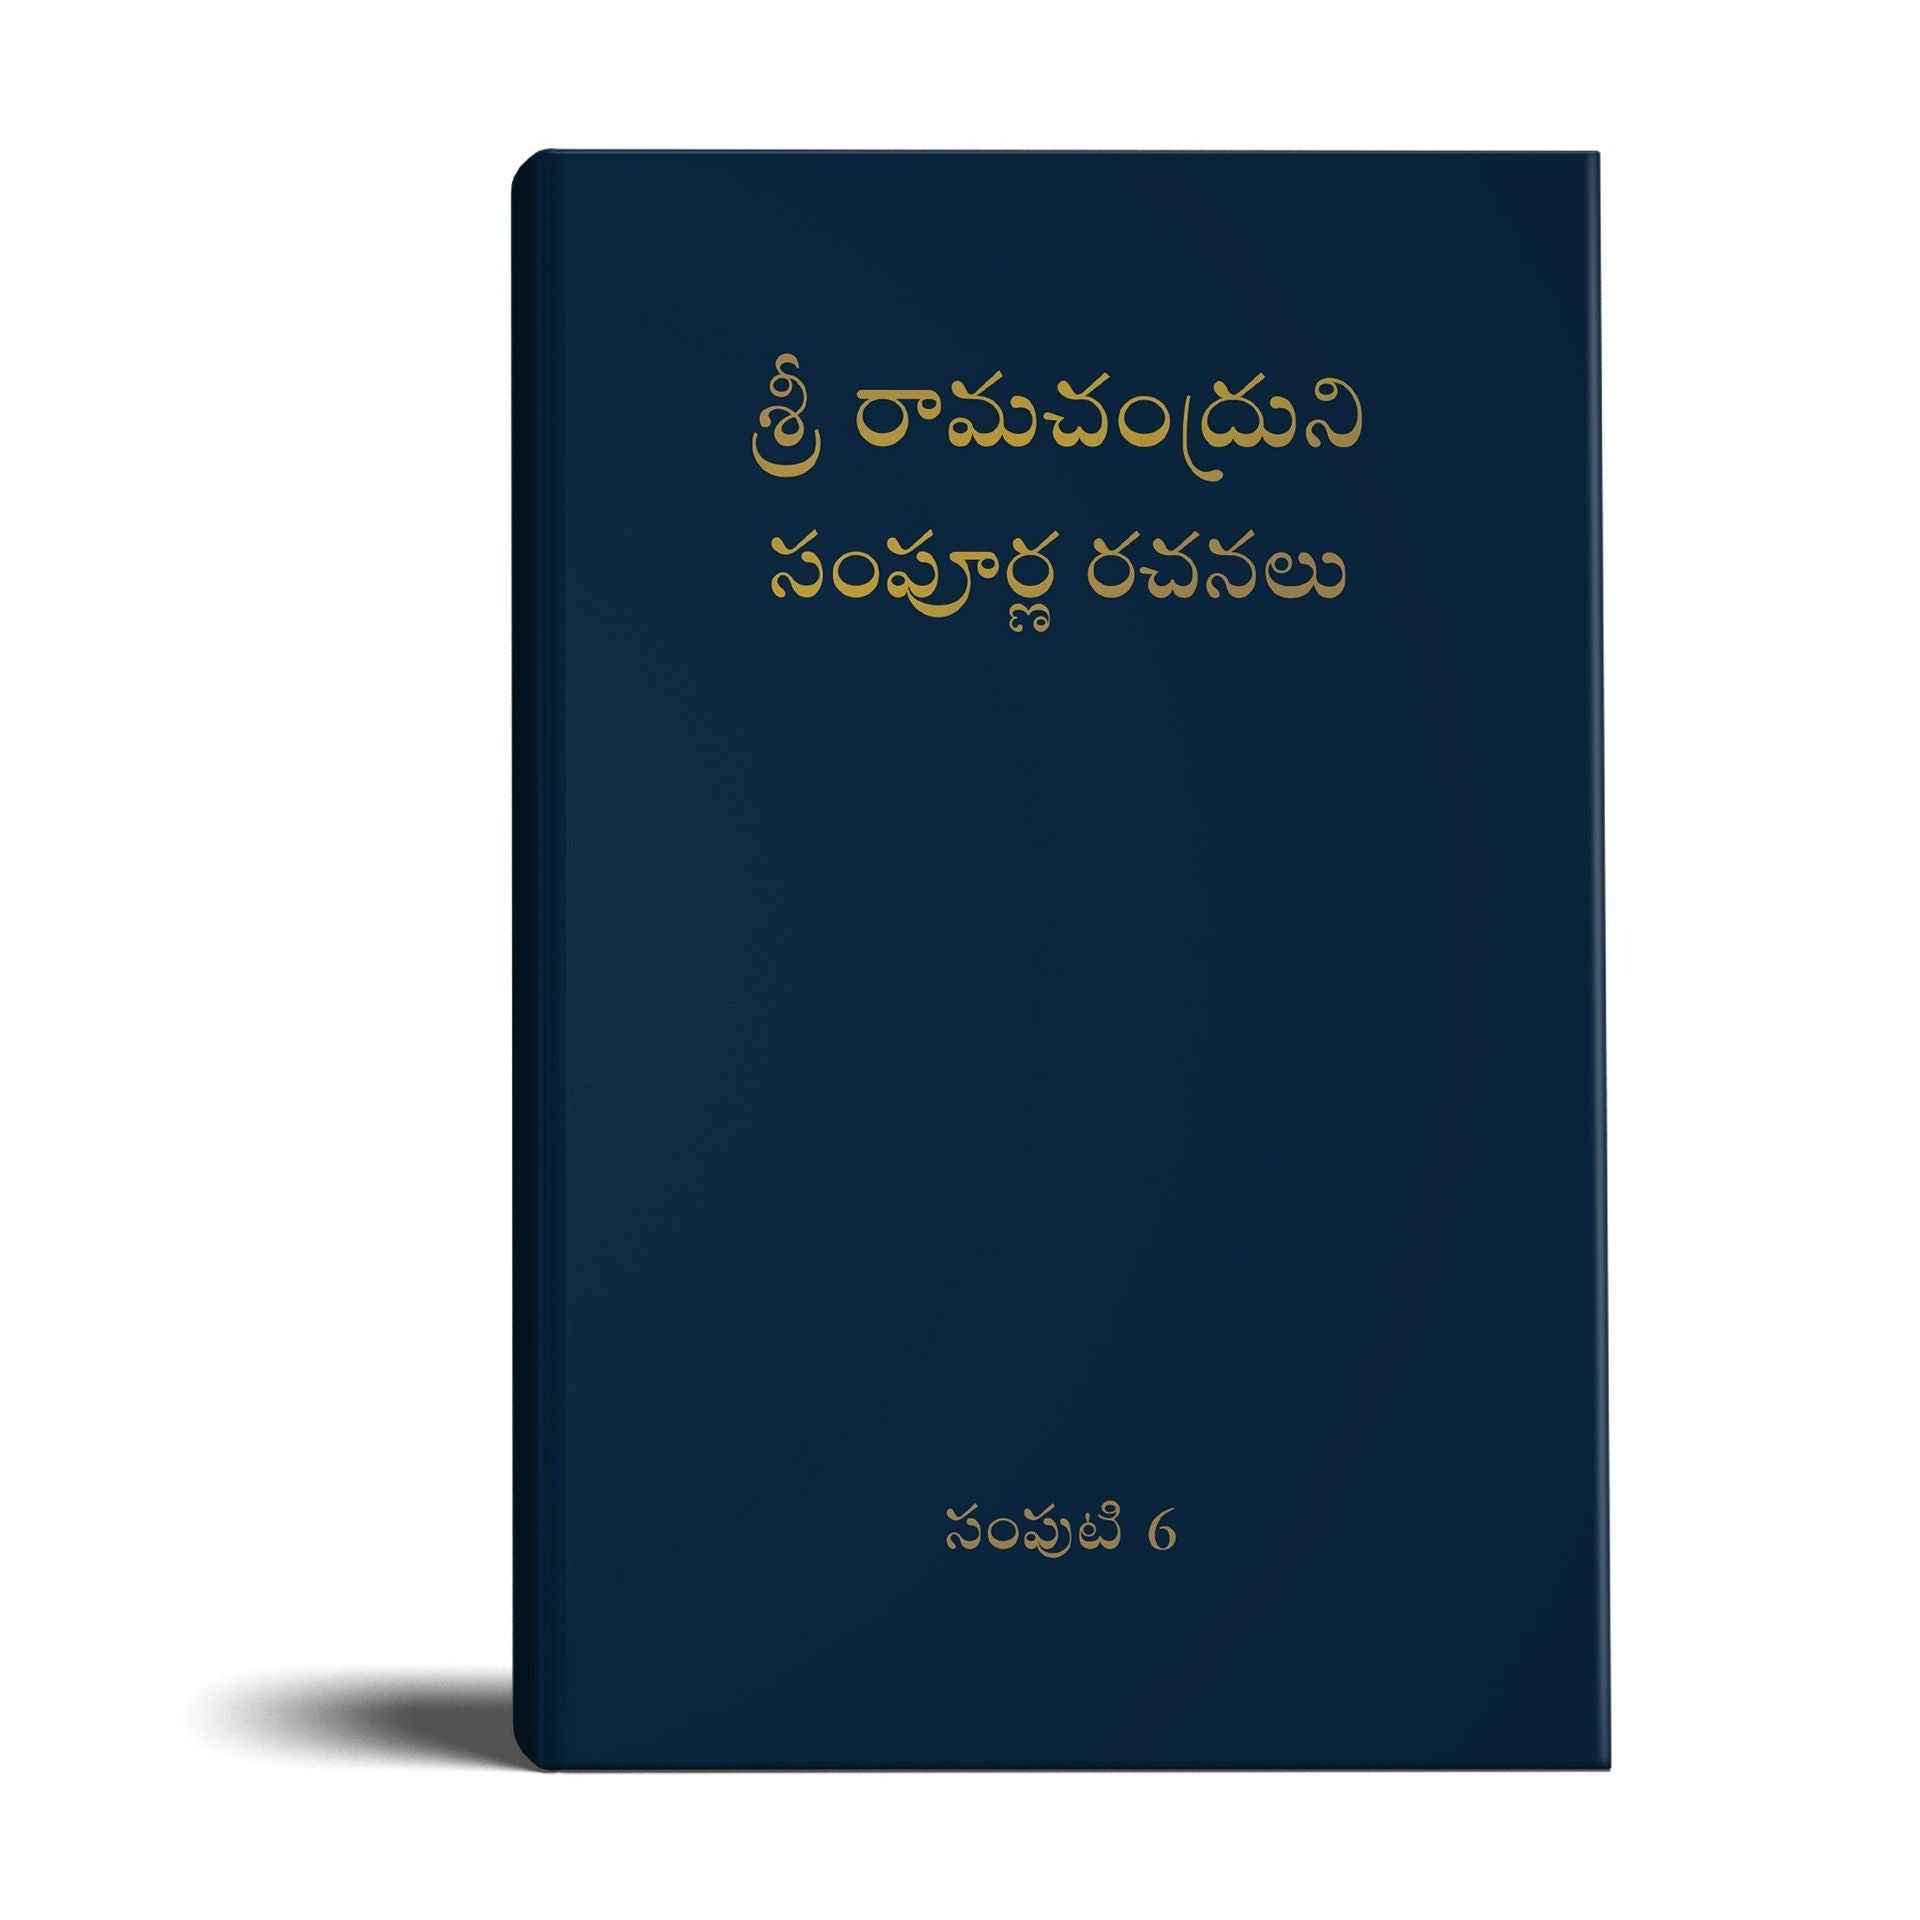 Complete Works of Ram Chandra (Babuji) - Volume 6